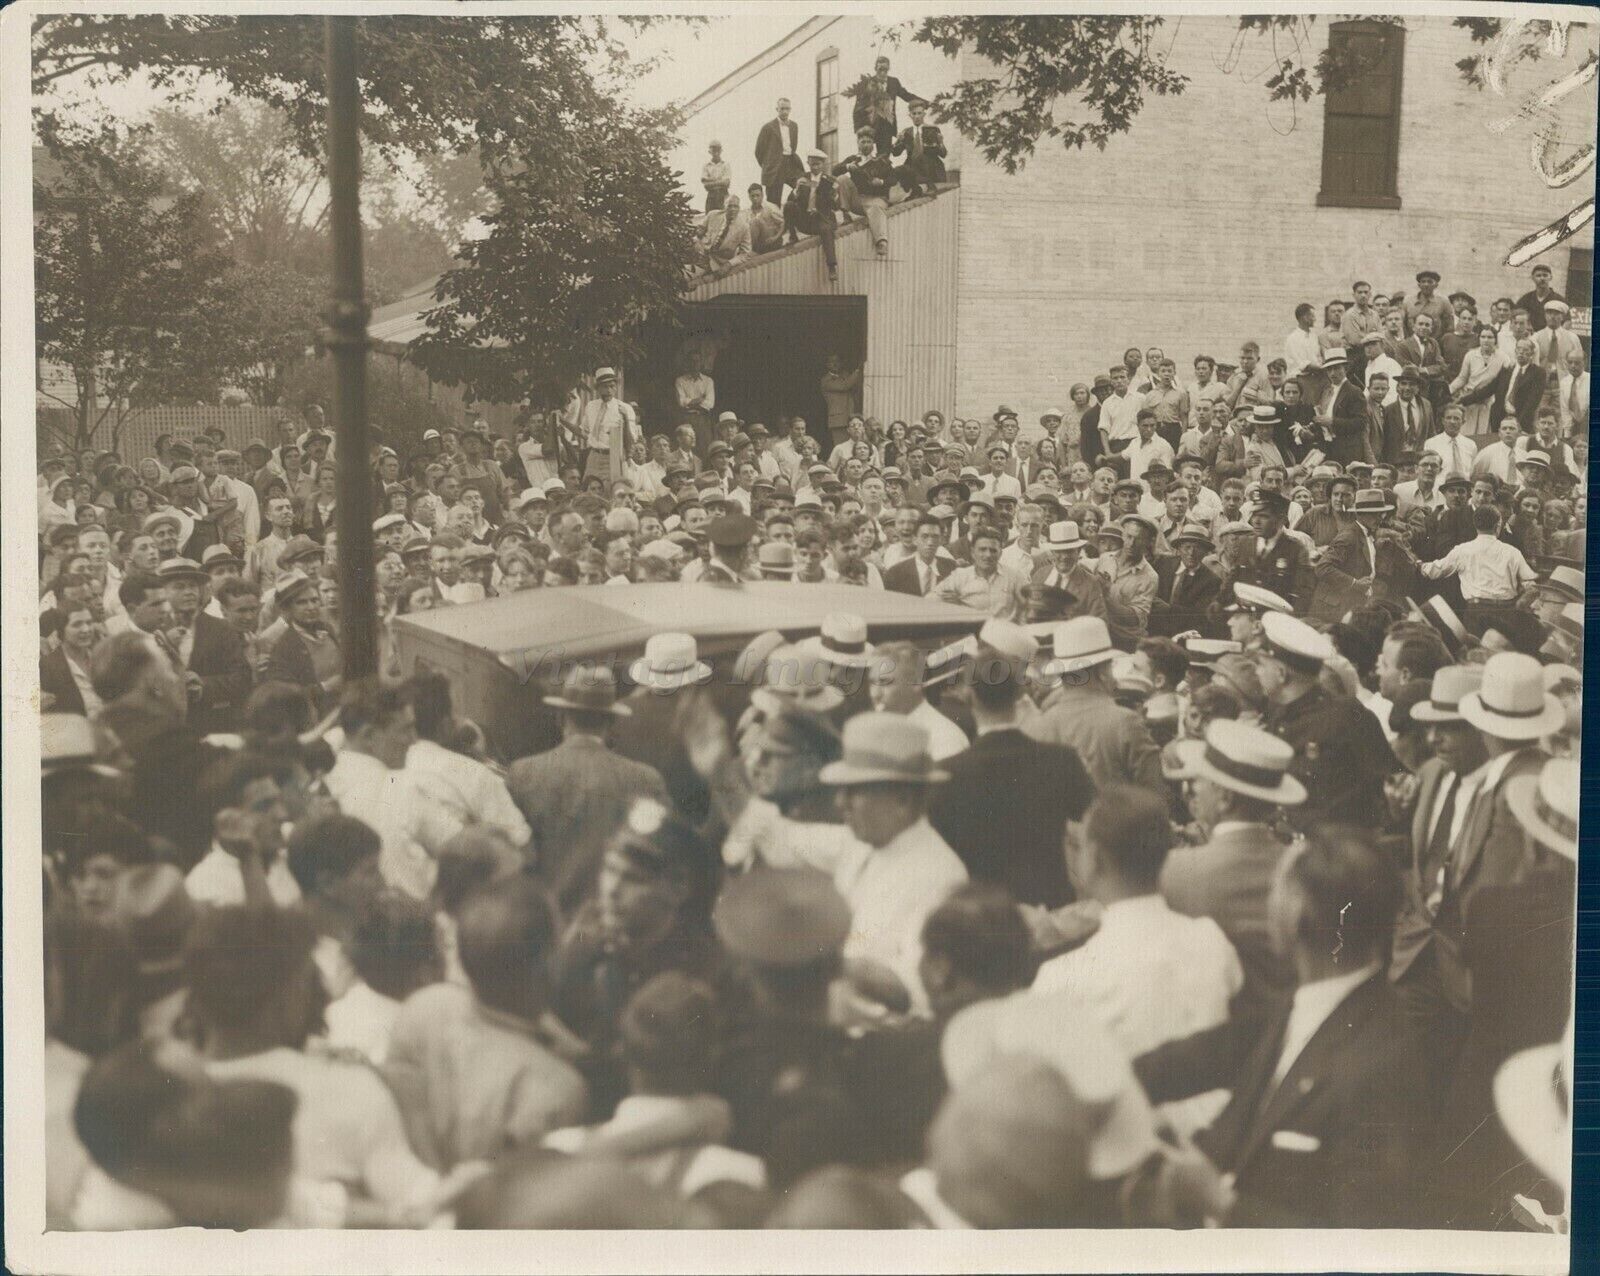 1931 Huge Crowd People Sitting Roof Business Buildings Image Vintage Press Photo